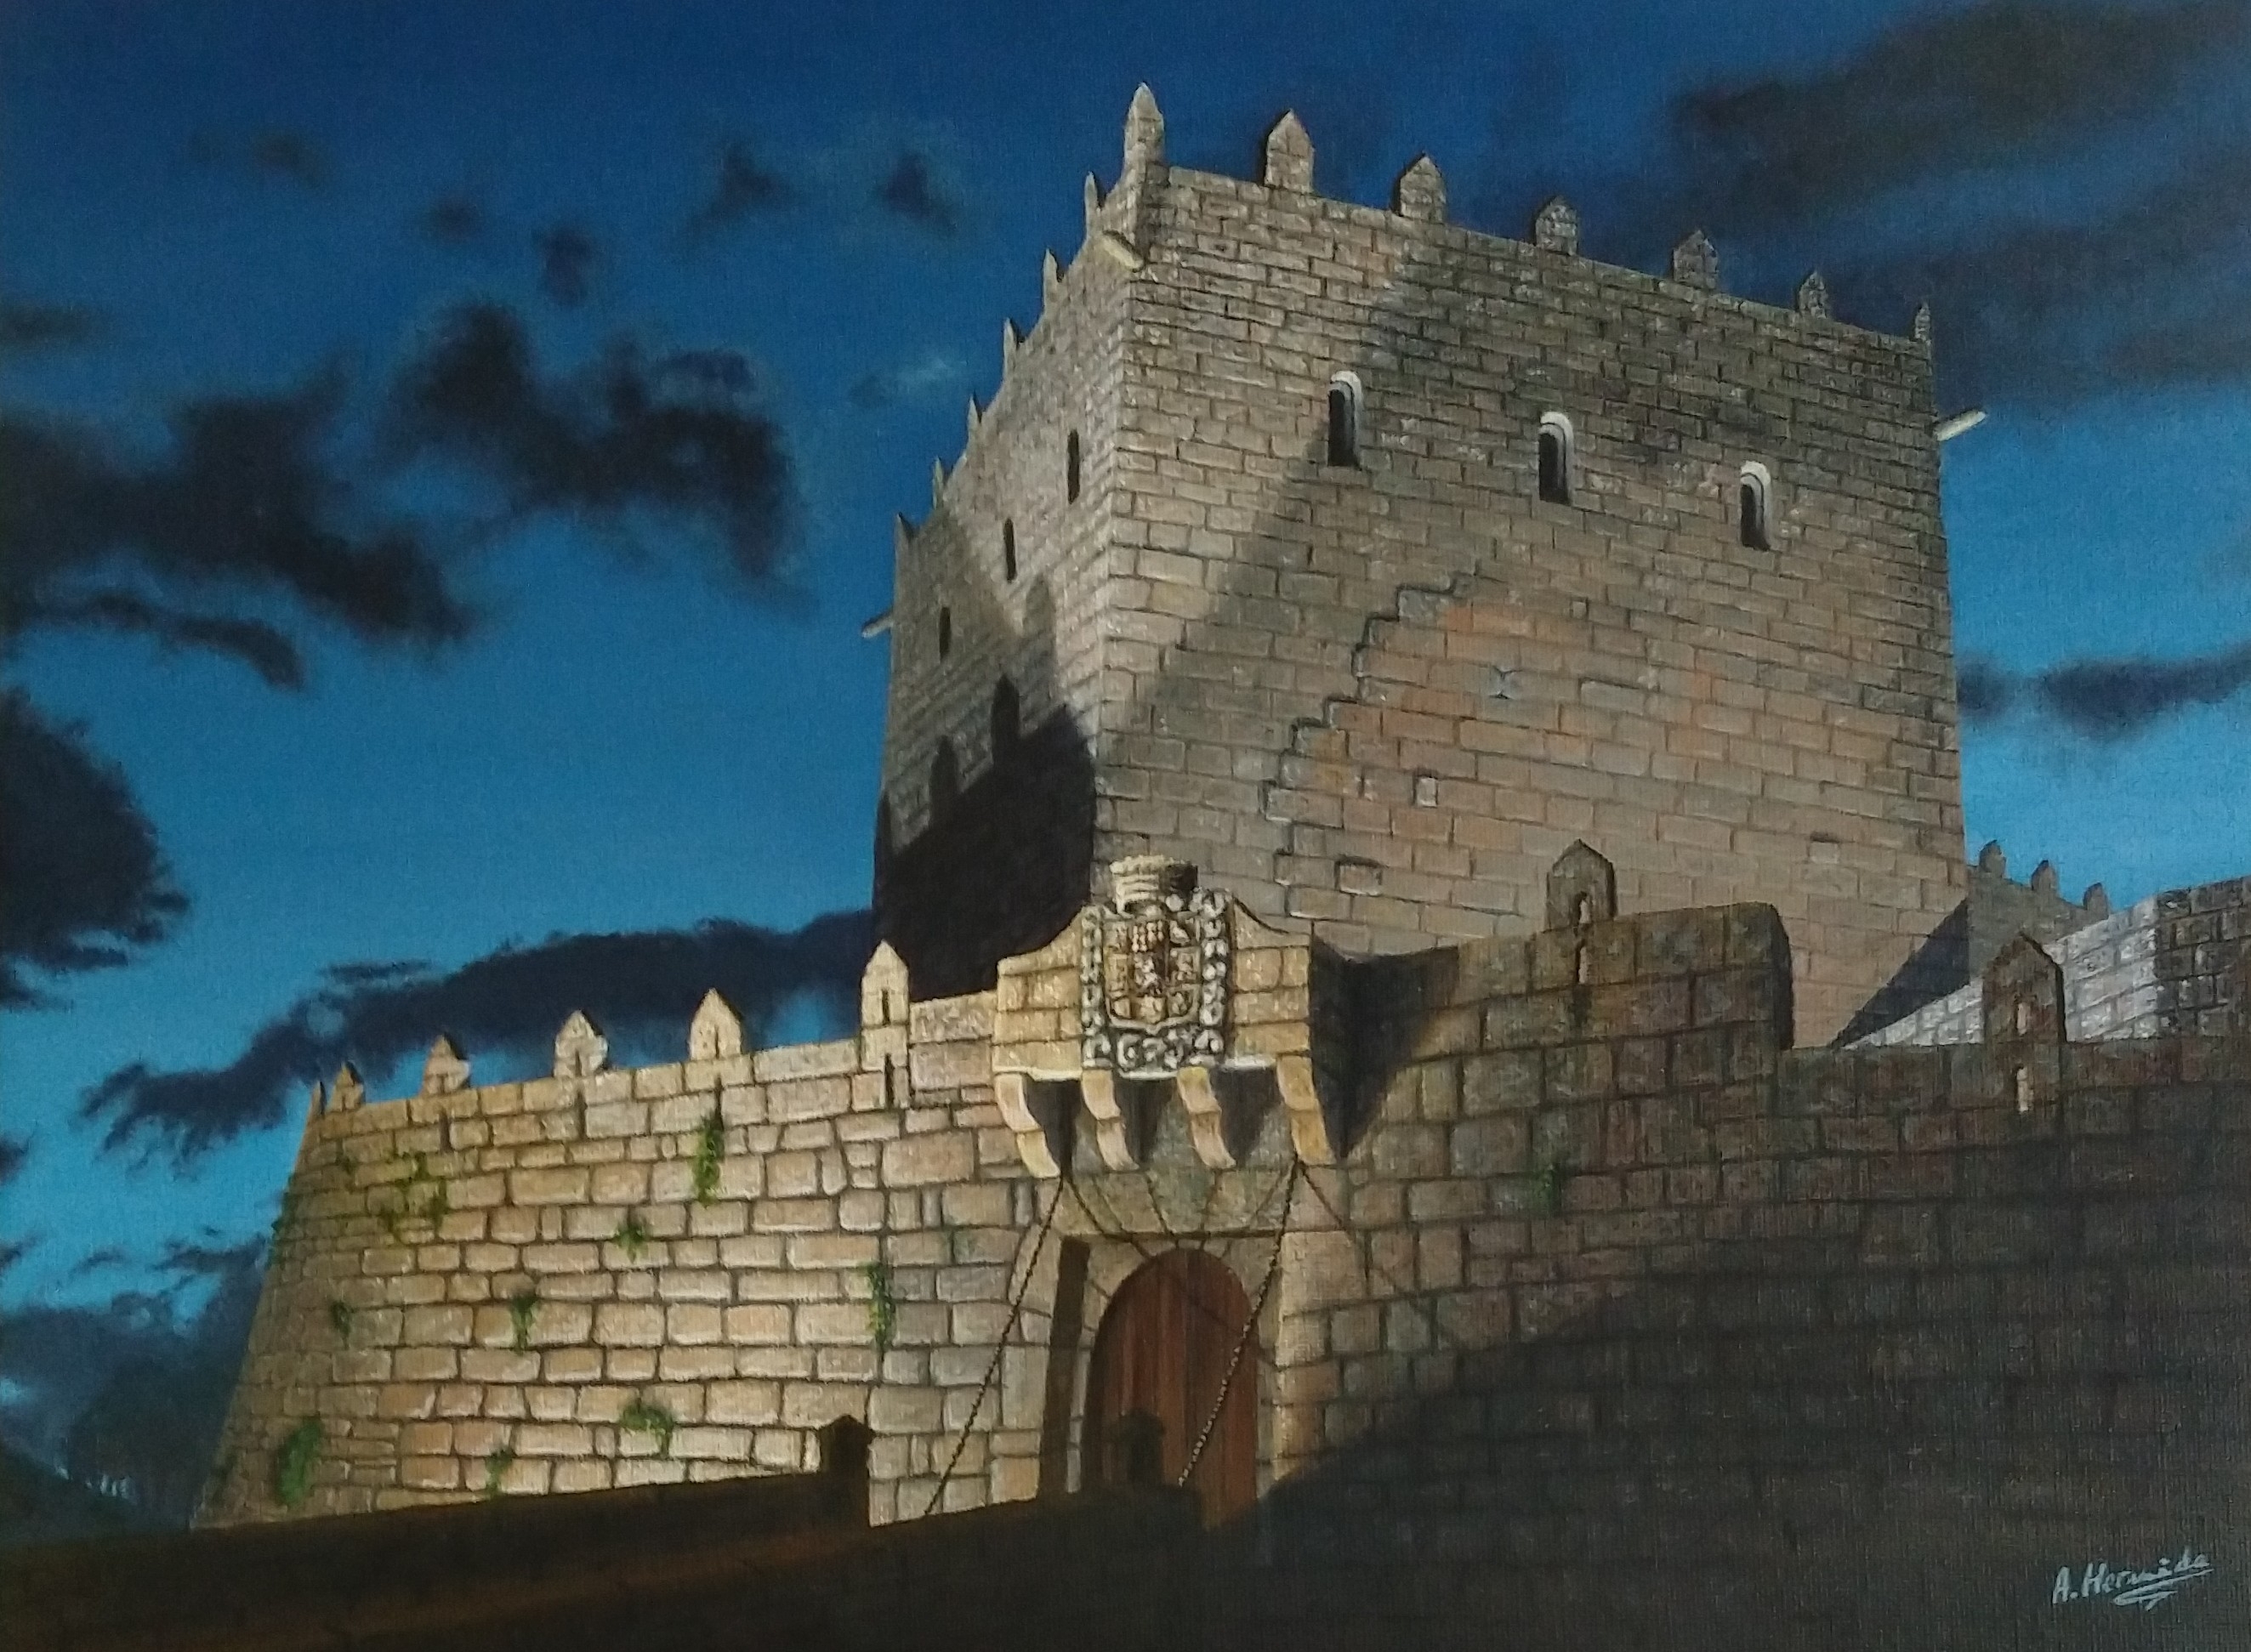 Castelo de Soutomaior (Pontevedra). Oil on canvas 40x30 cm.